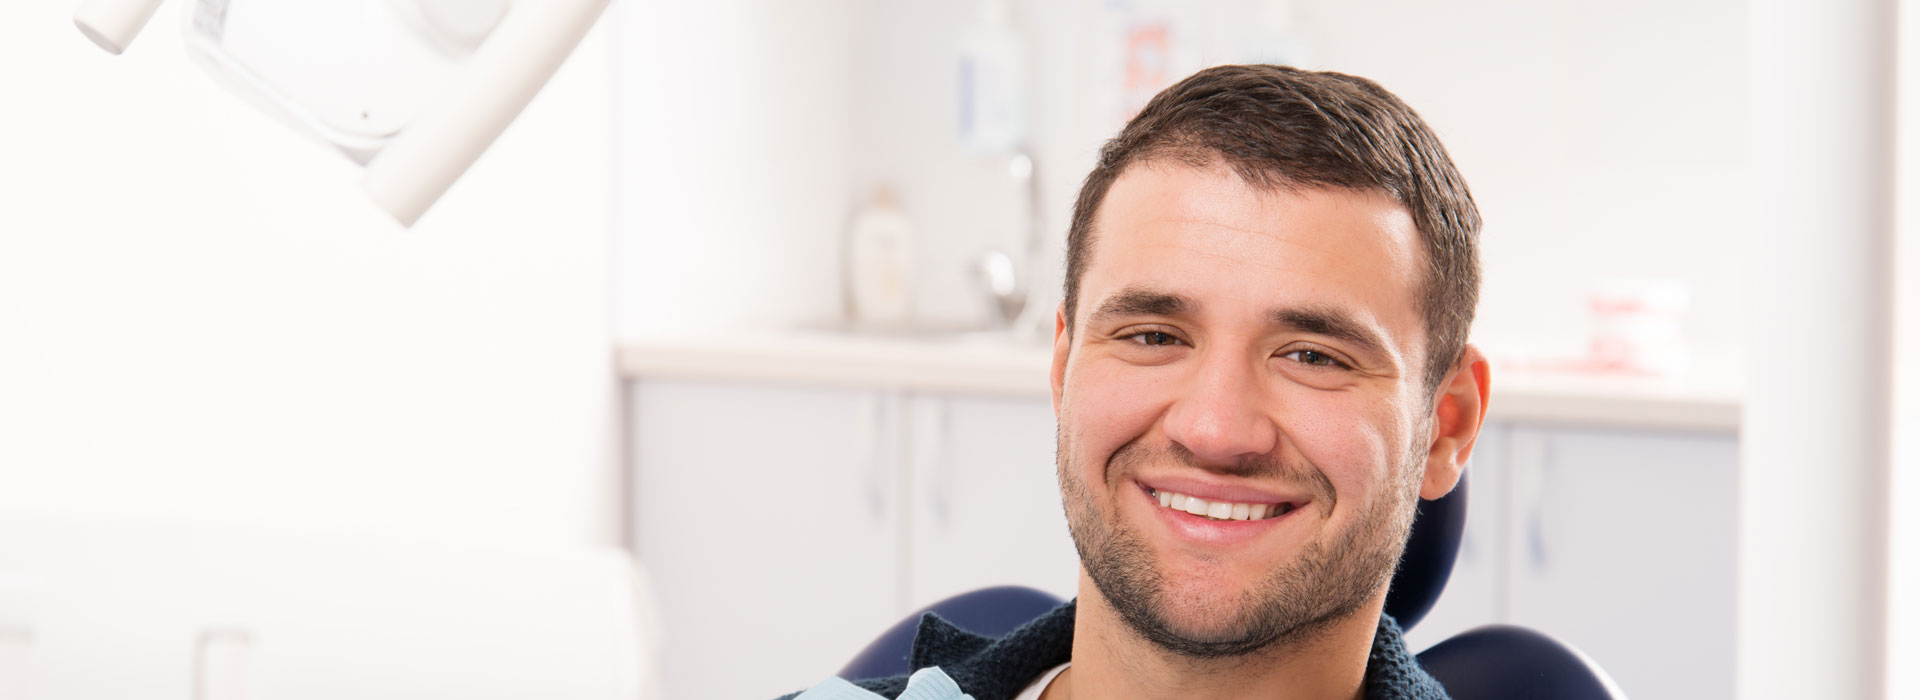 A man getting ready for dental implant treatment